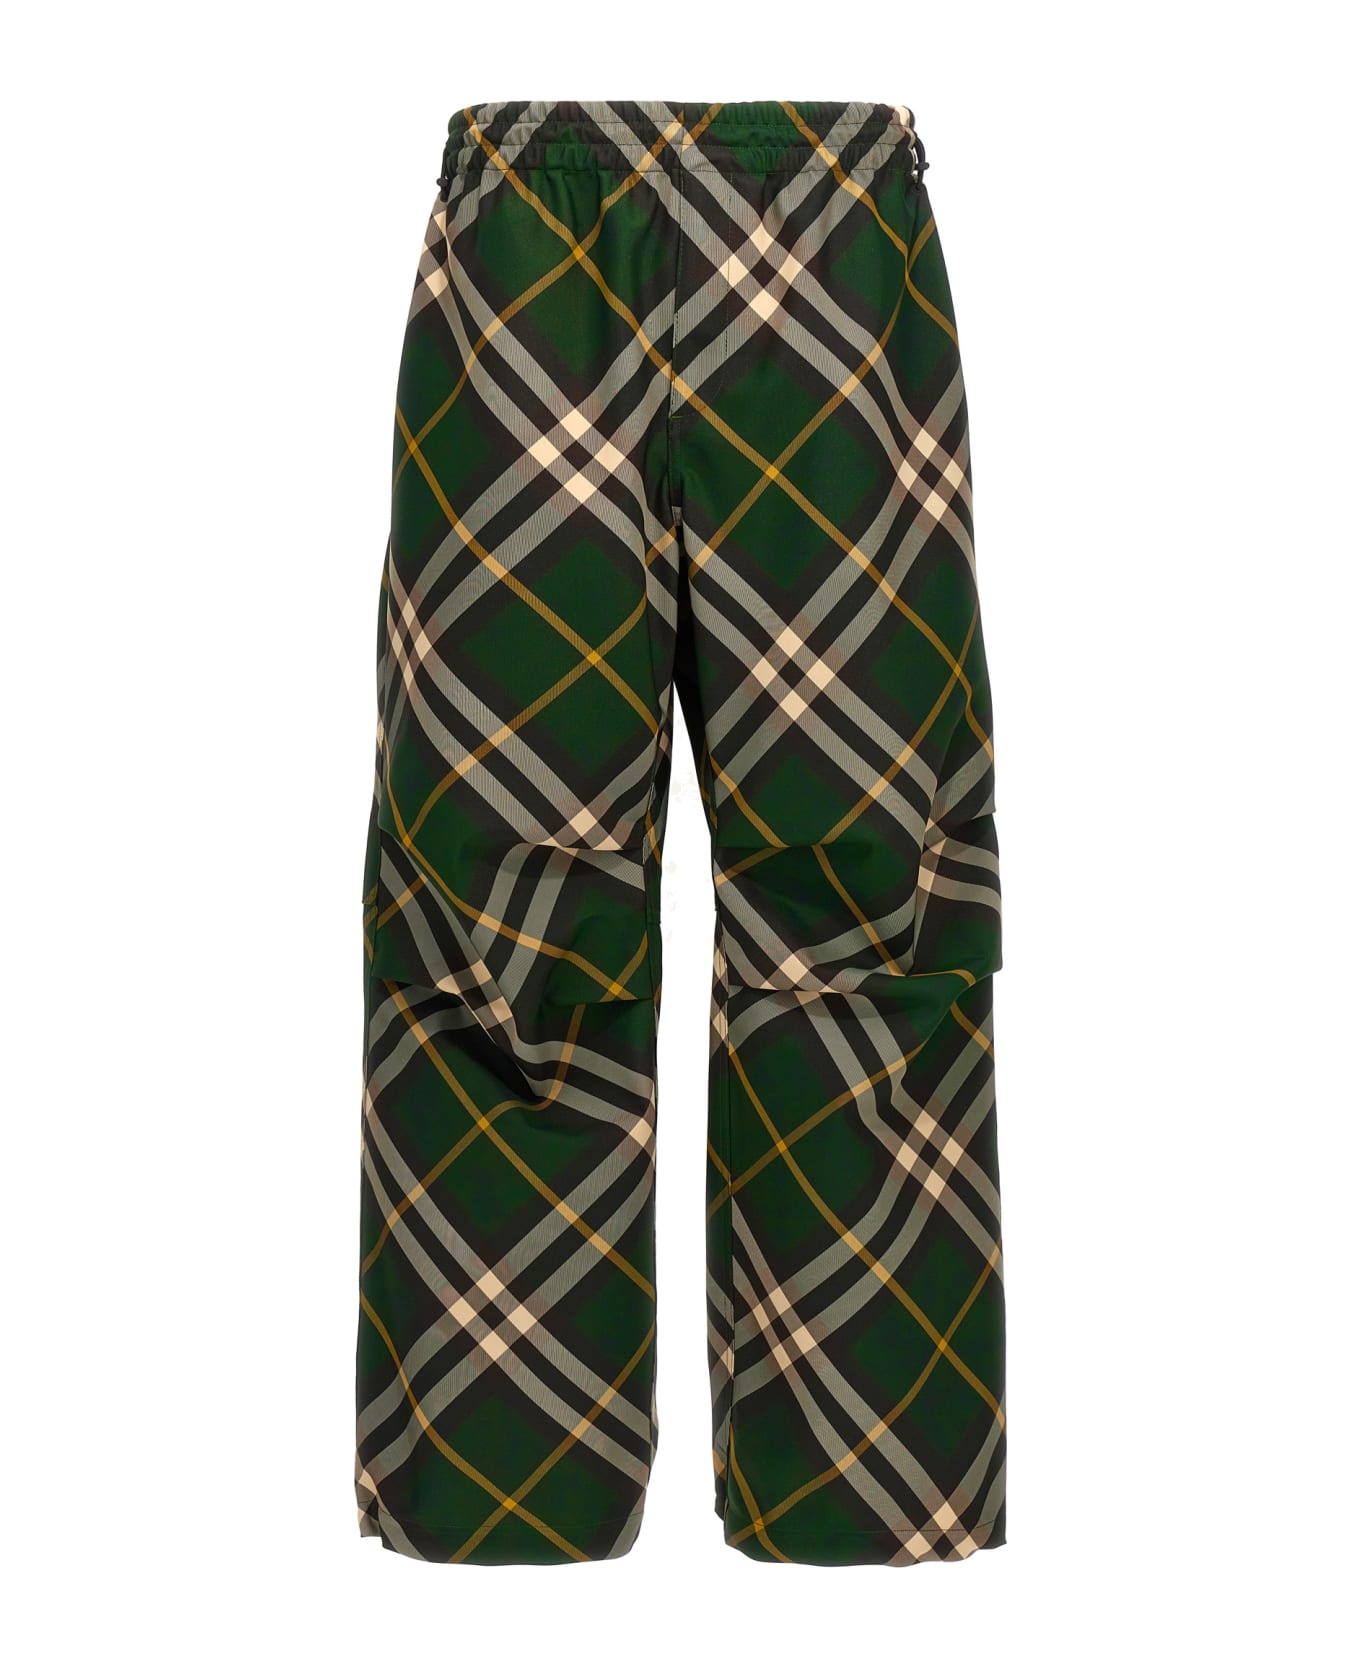 Burberry Check Pants - Green